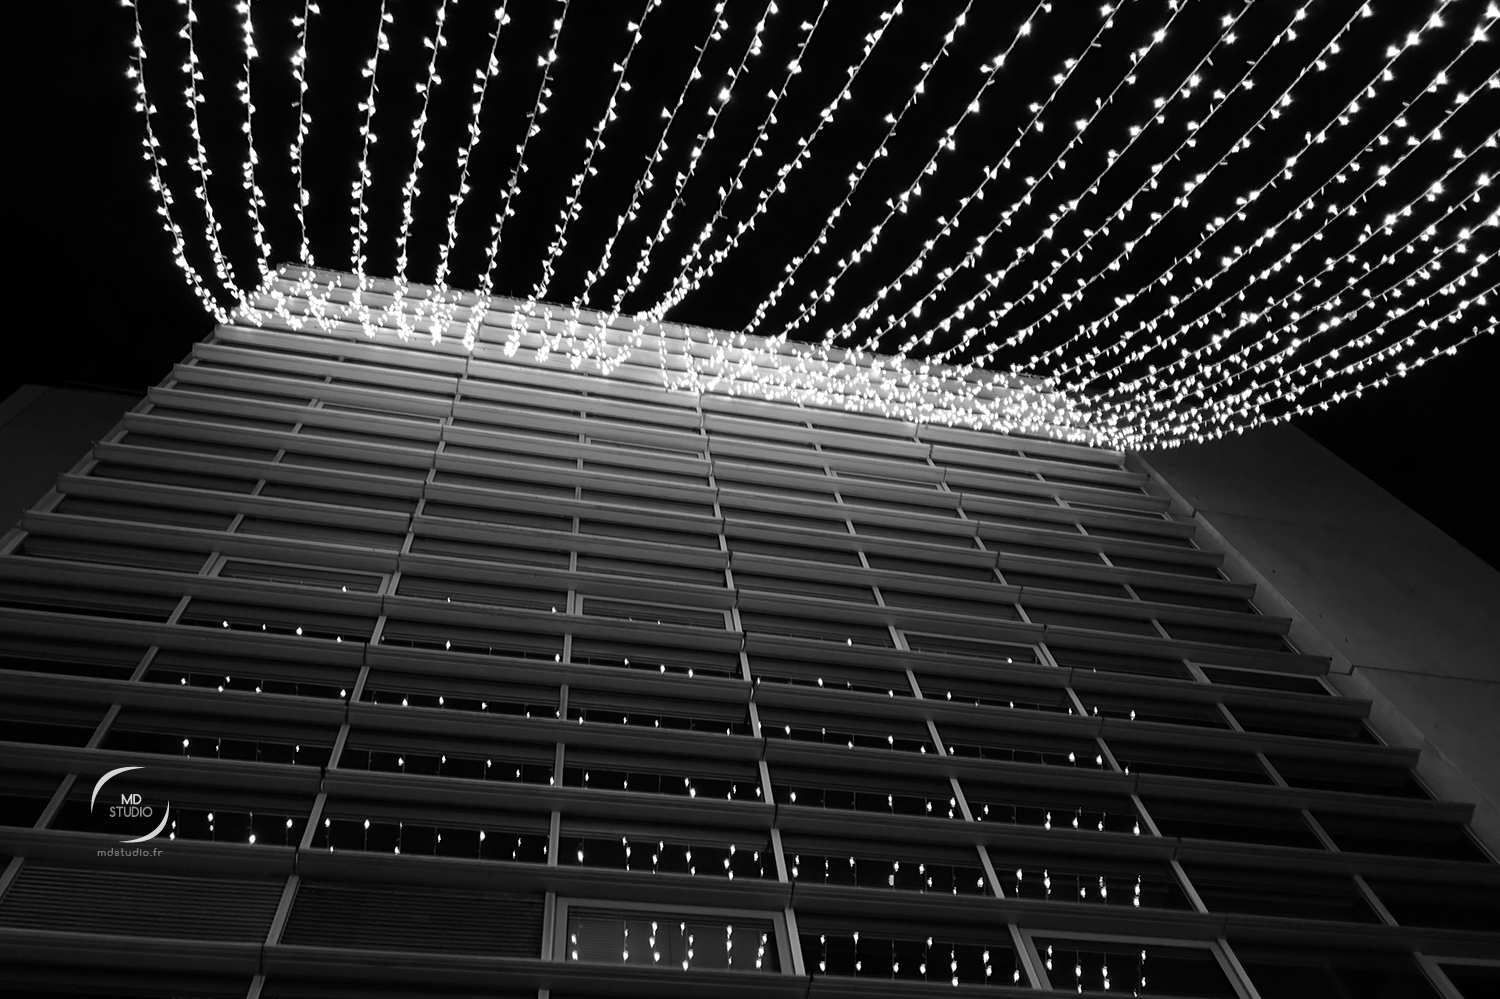 guirlandes - illuminations et décorations de Noël 2020 | photo MDstudio